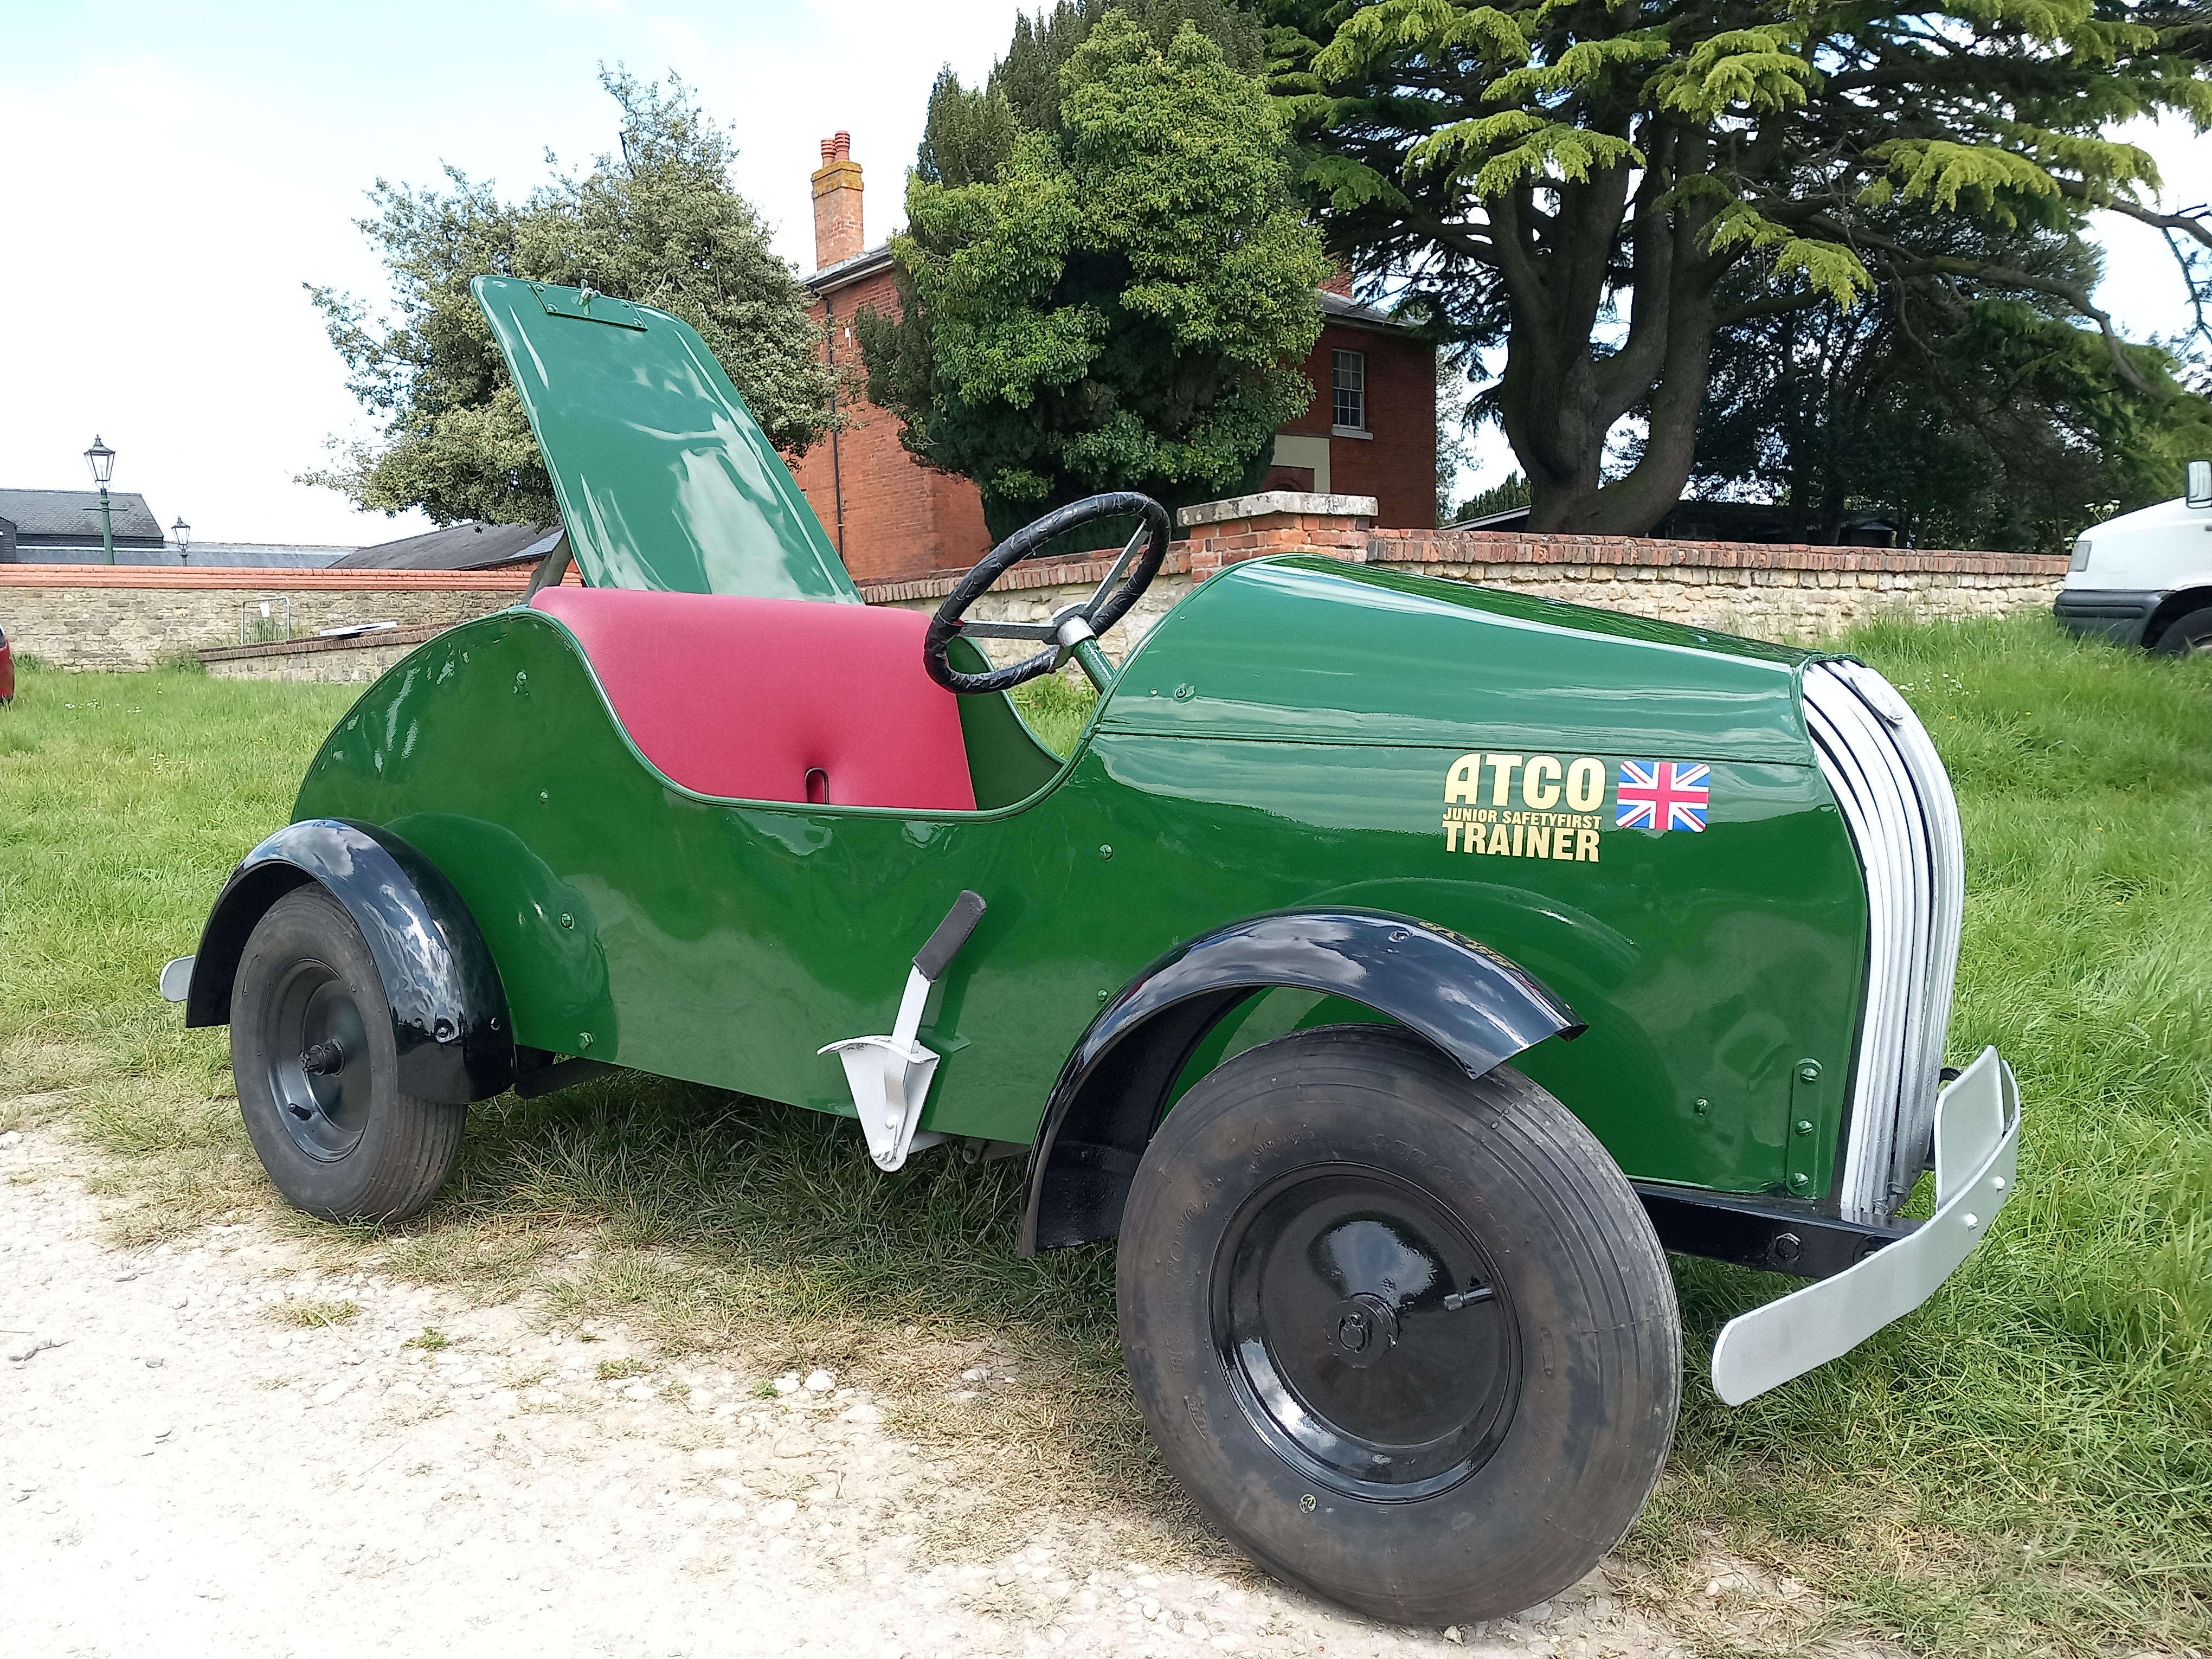 The Atco Car